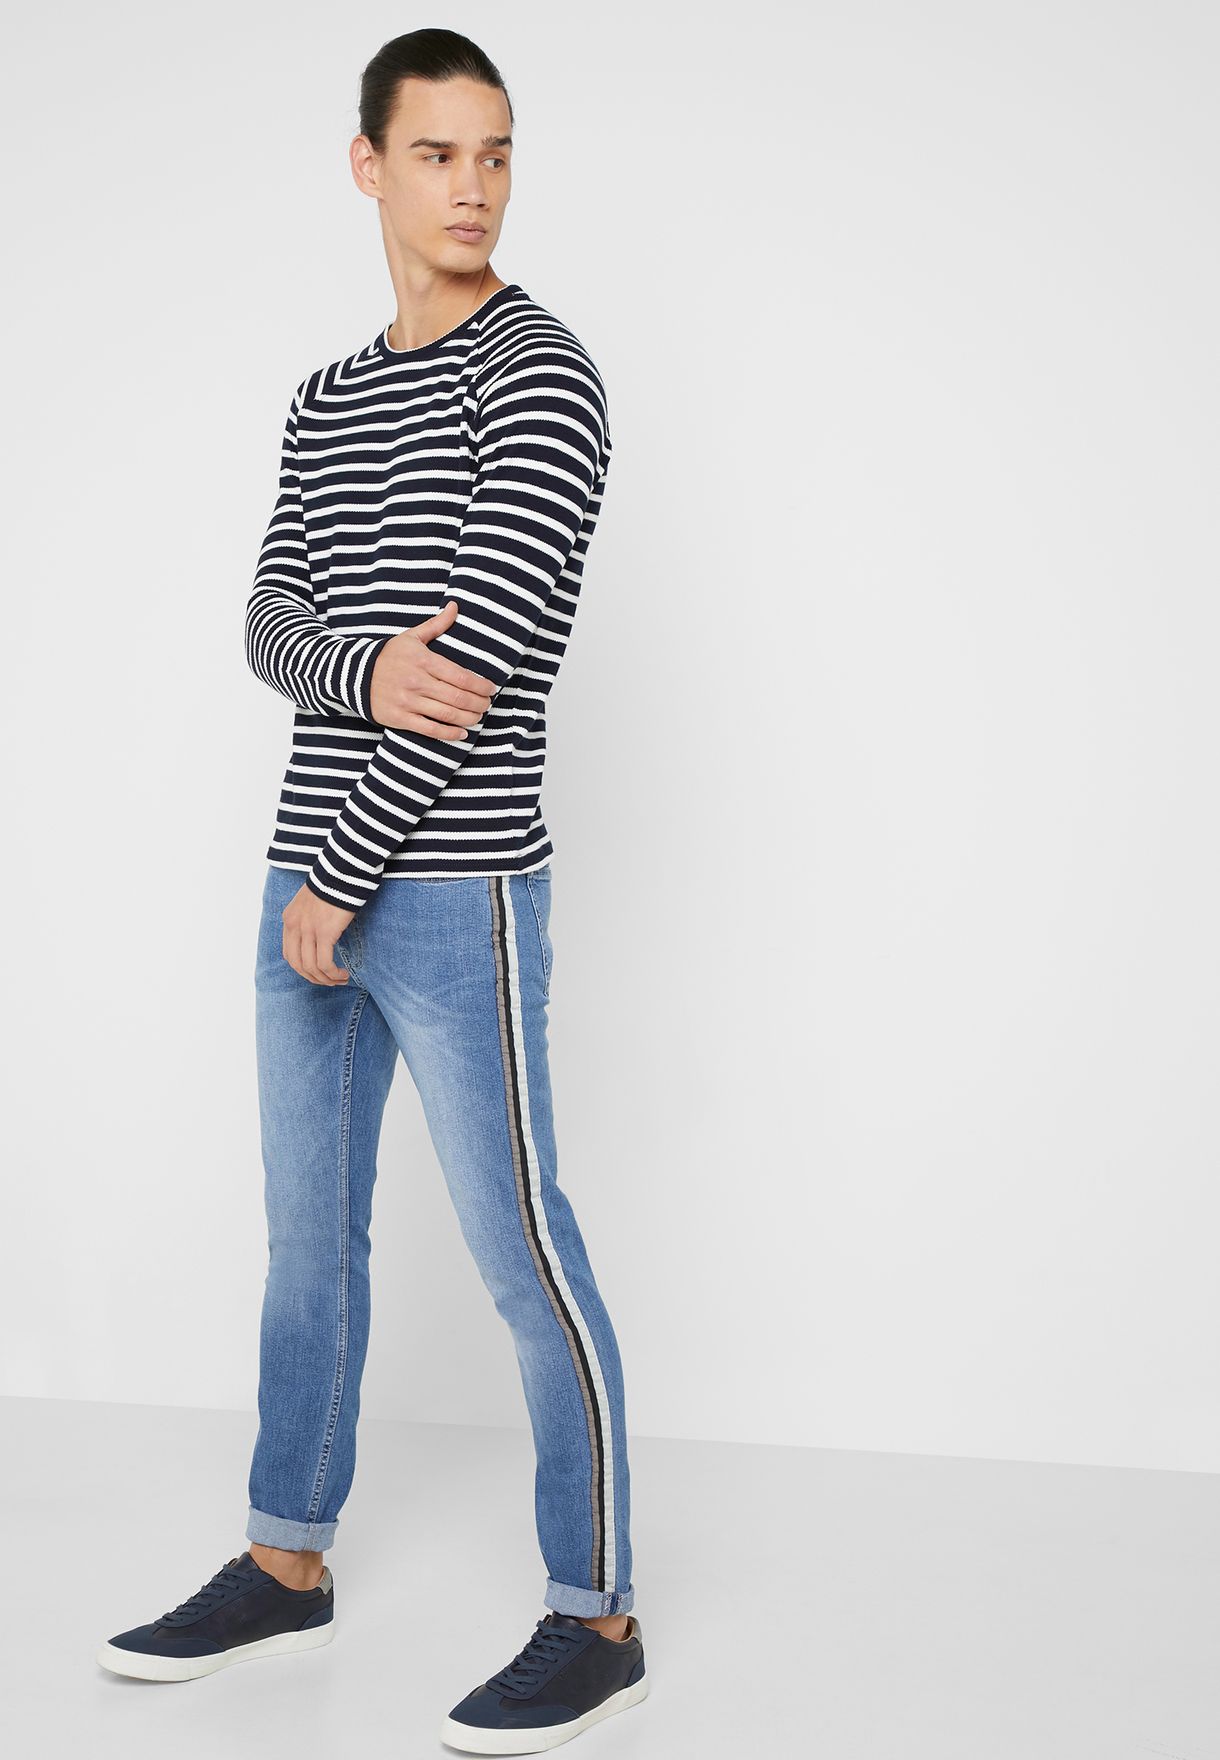 side stripe jeans for mens